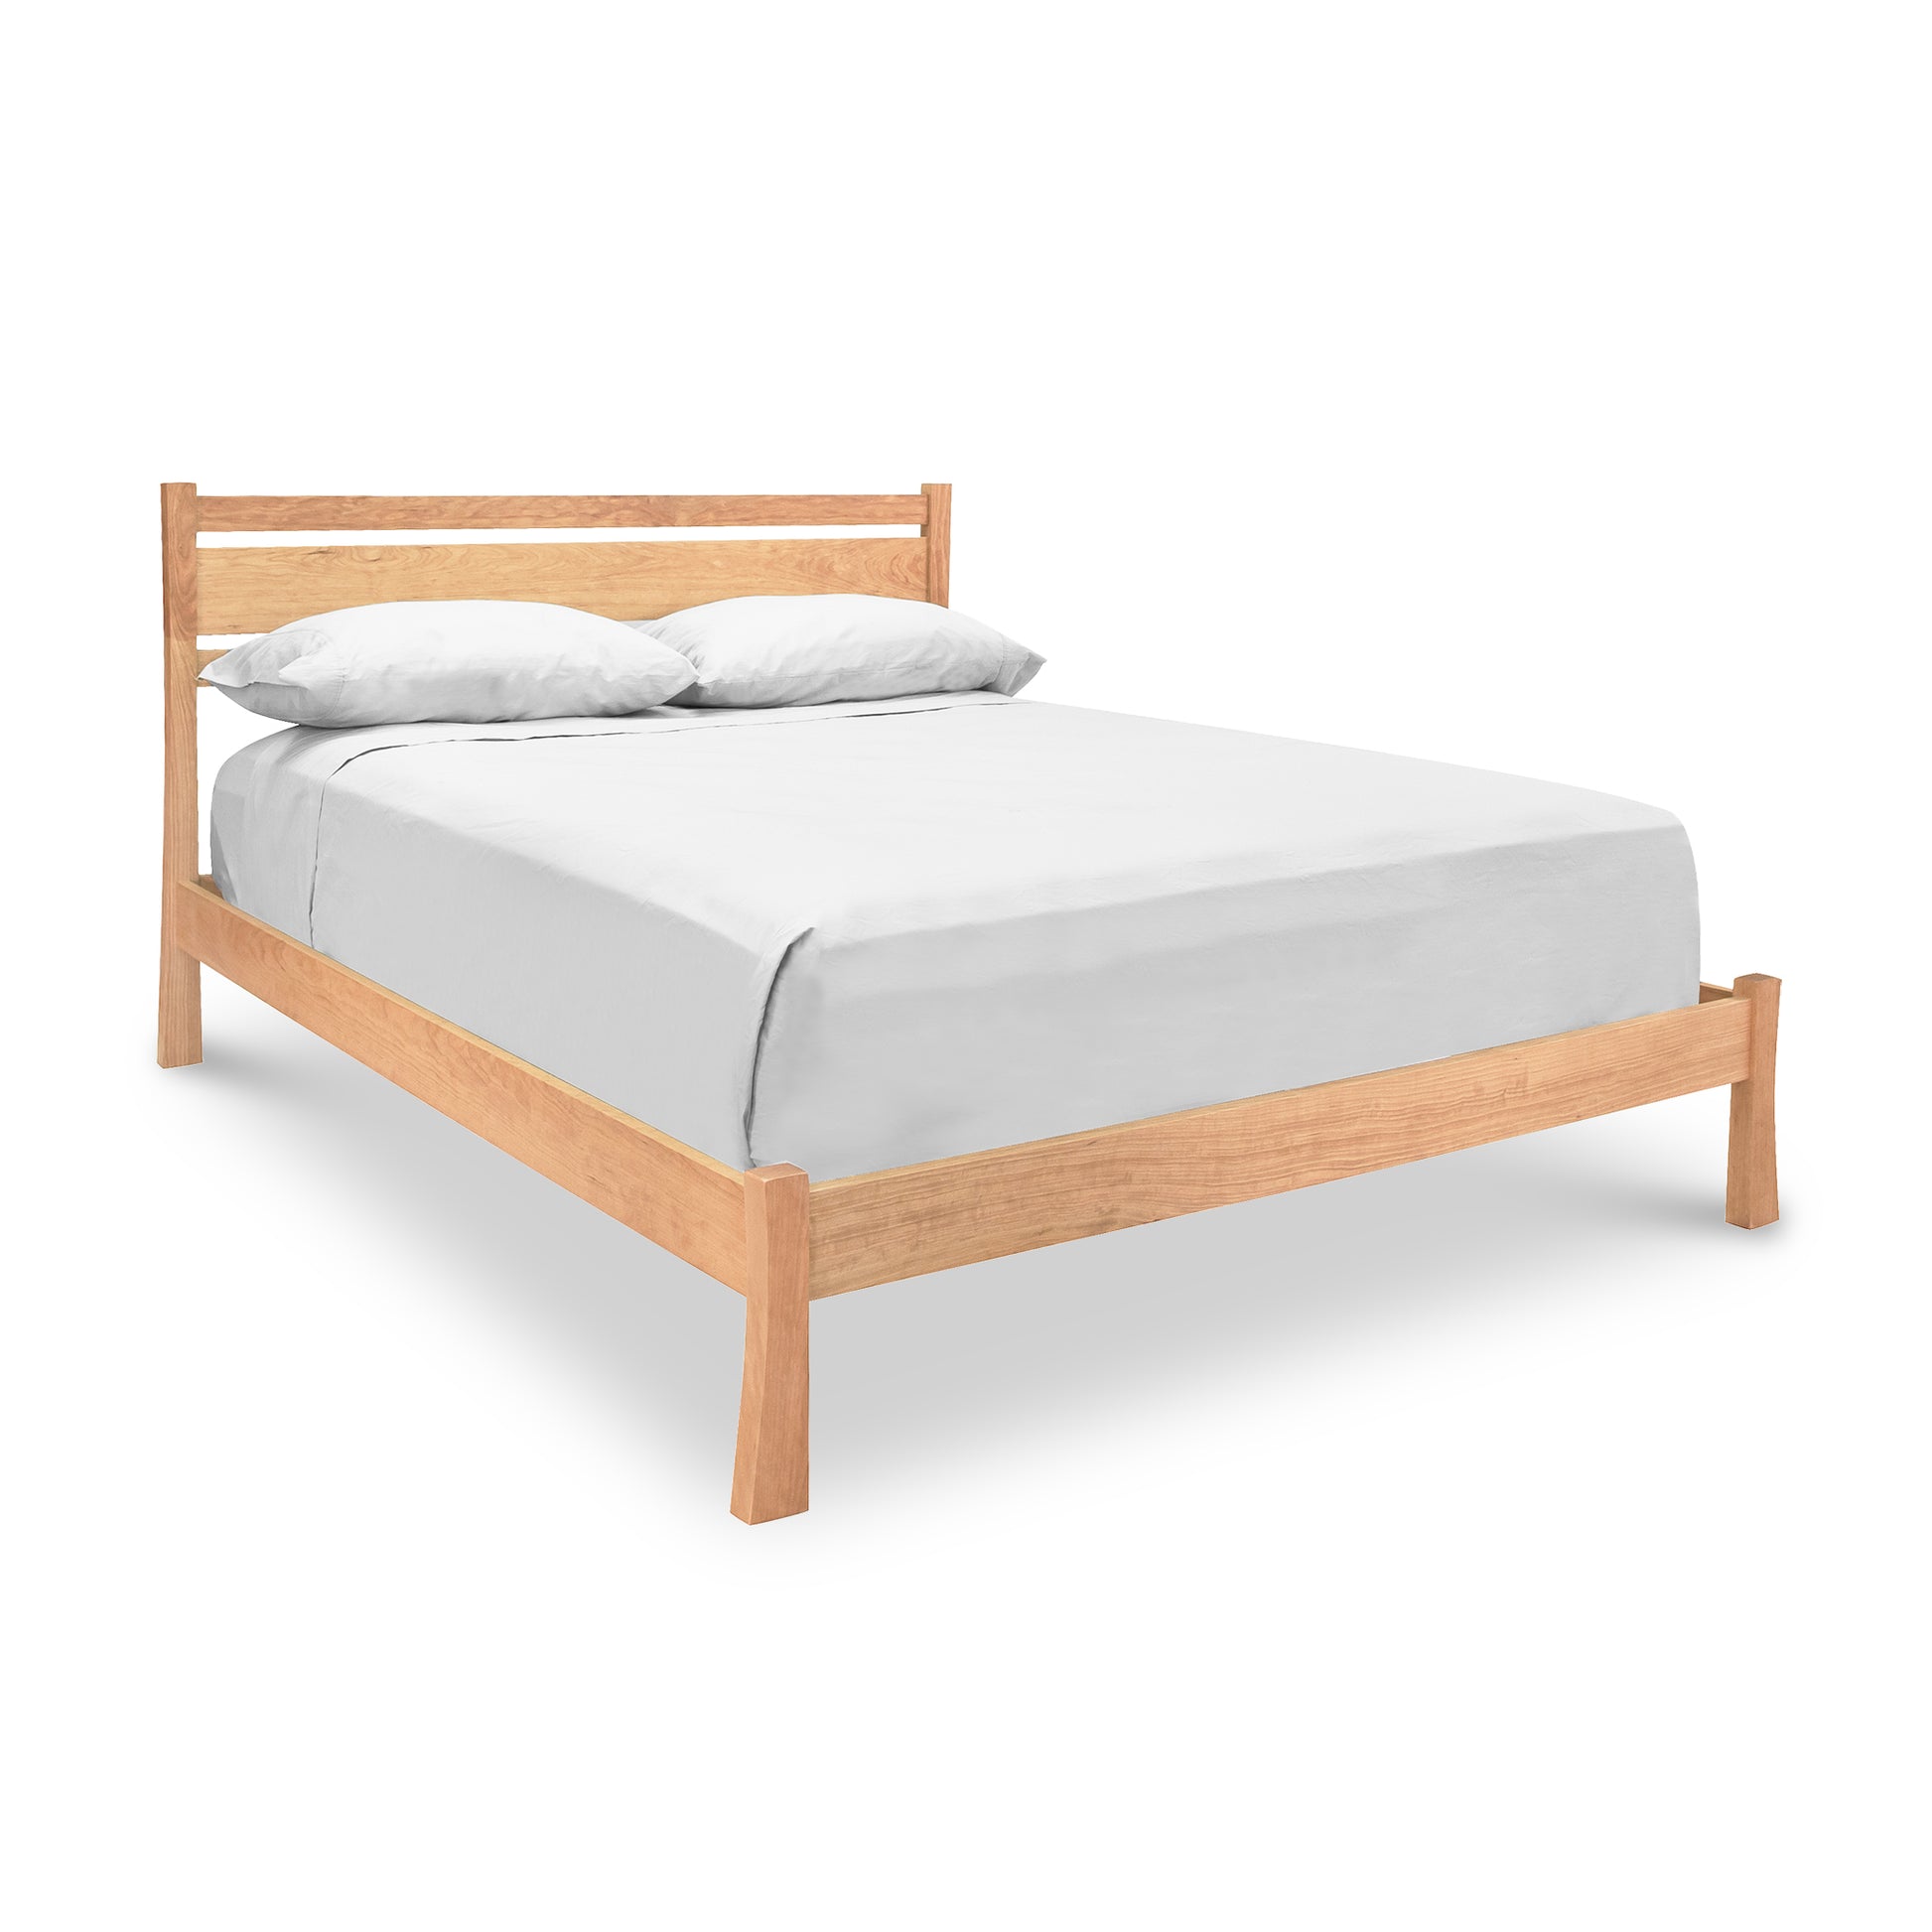 A Vermont Furniture Designs Horizon Platform Bed with a wooden frame.